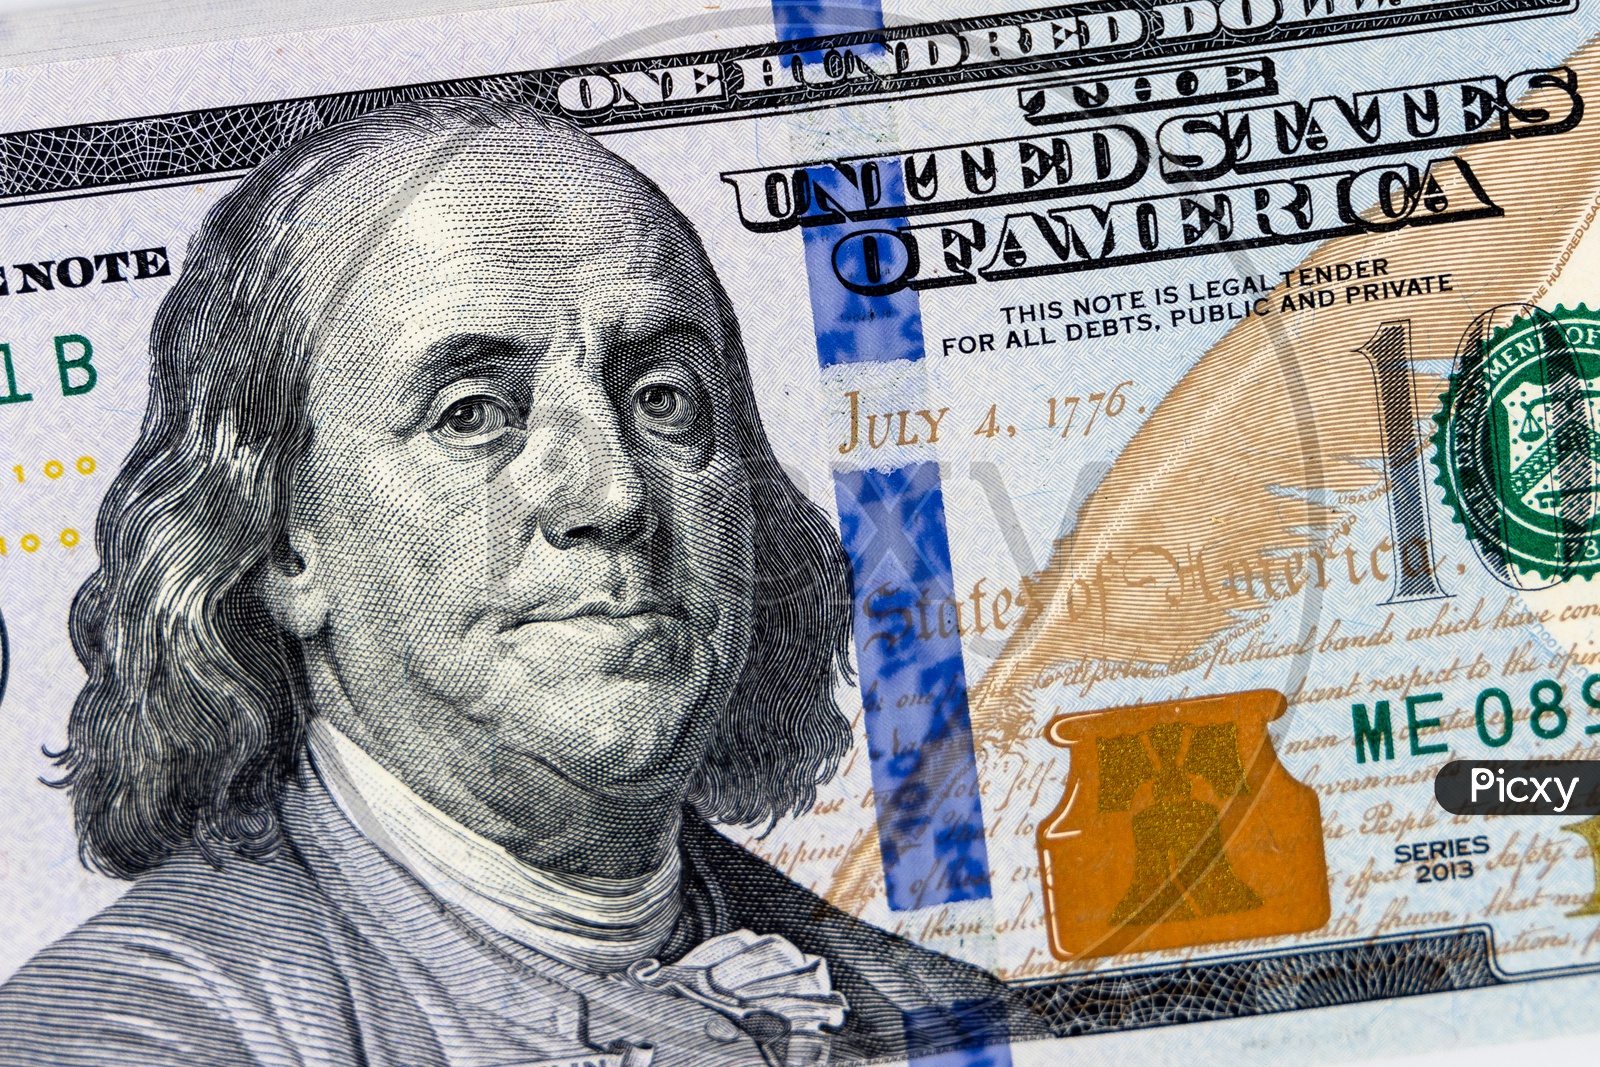 Benjamin Franklin on hundred dollar US note.